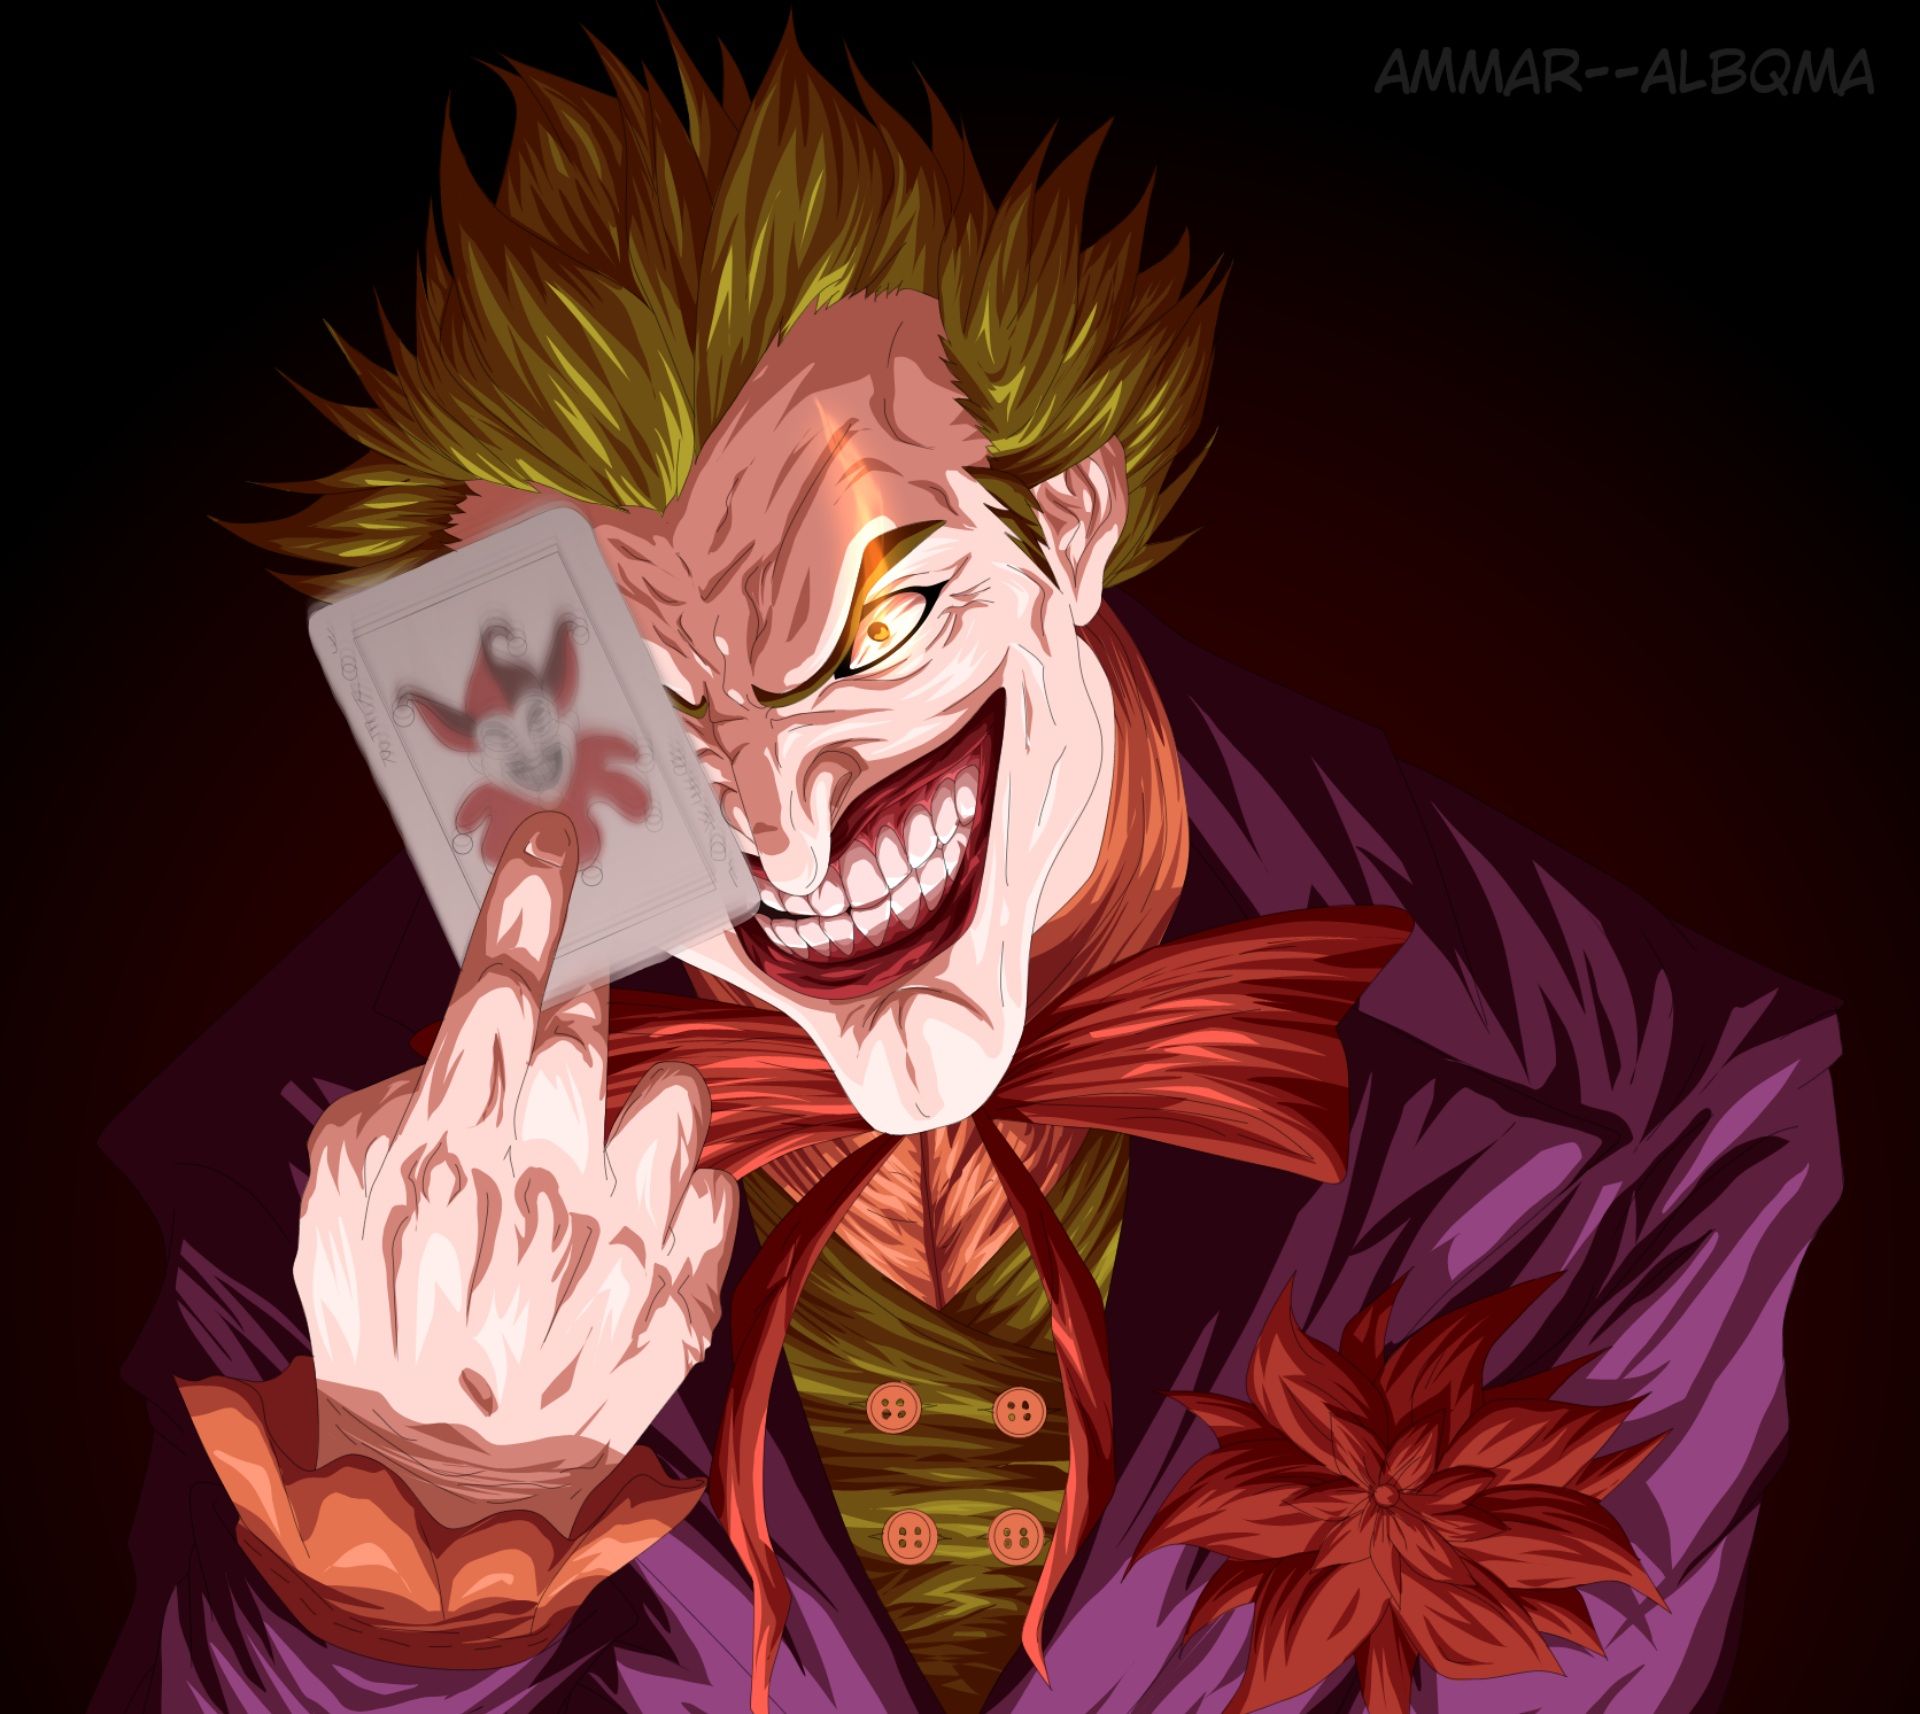 The Joker Looks Wild In New Anime By Attack On Titan Folks-demhanvico.com.vn